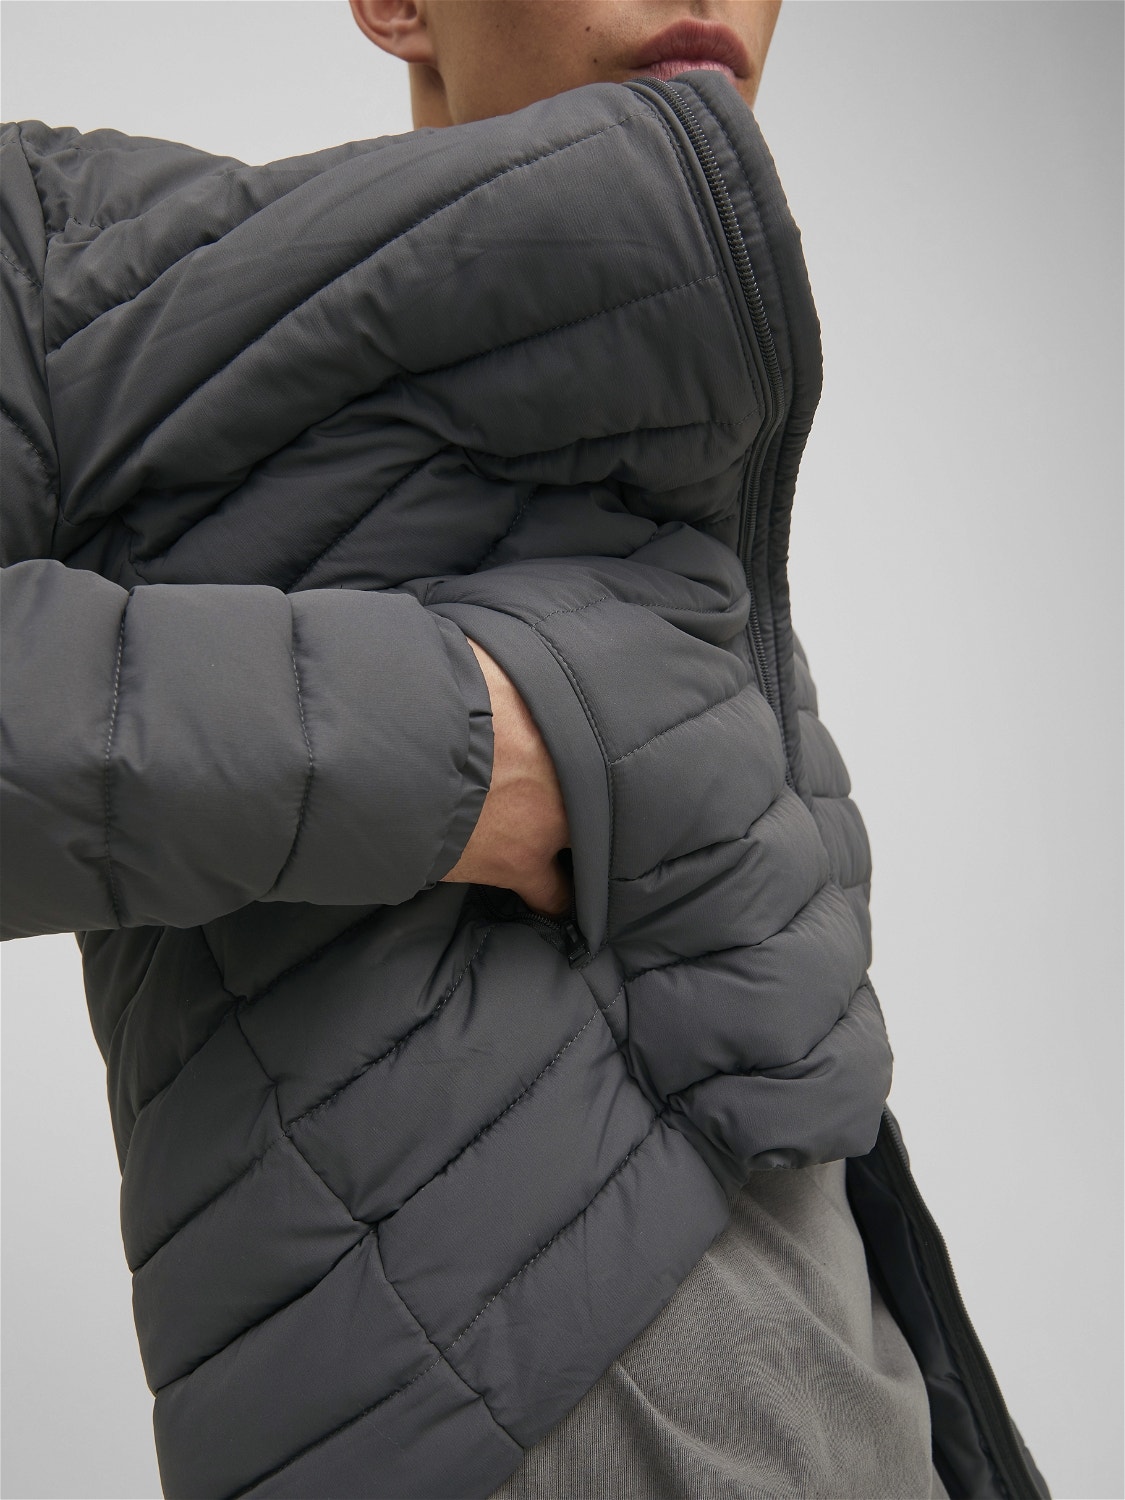 Jack & Jones Puffer jacket -Asphalt - 12211129